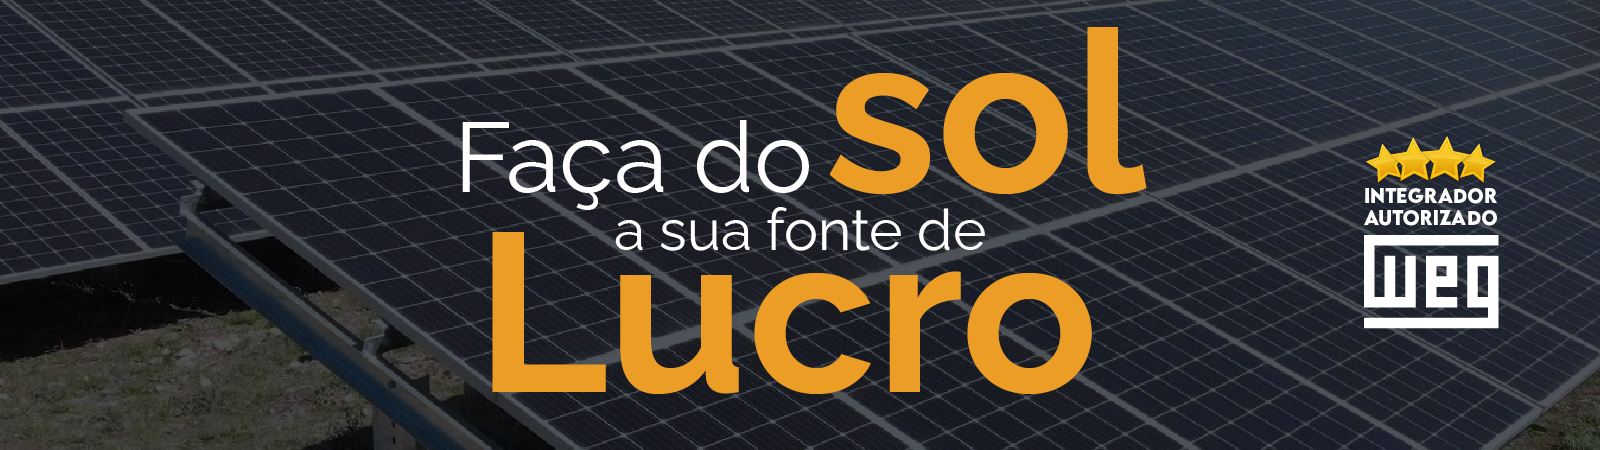 Solar Prado, produtos para energia solar!